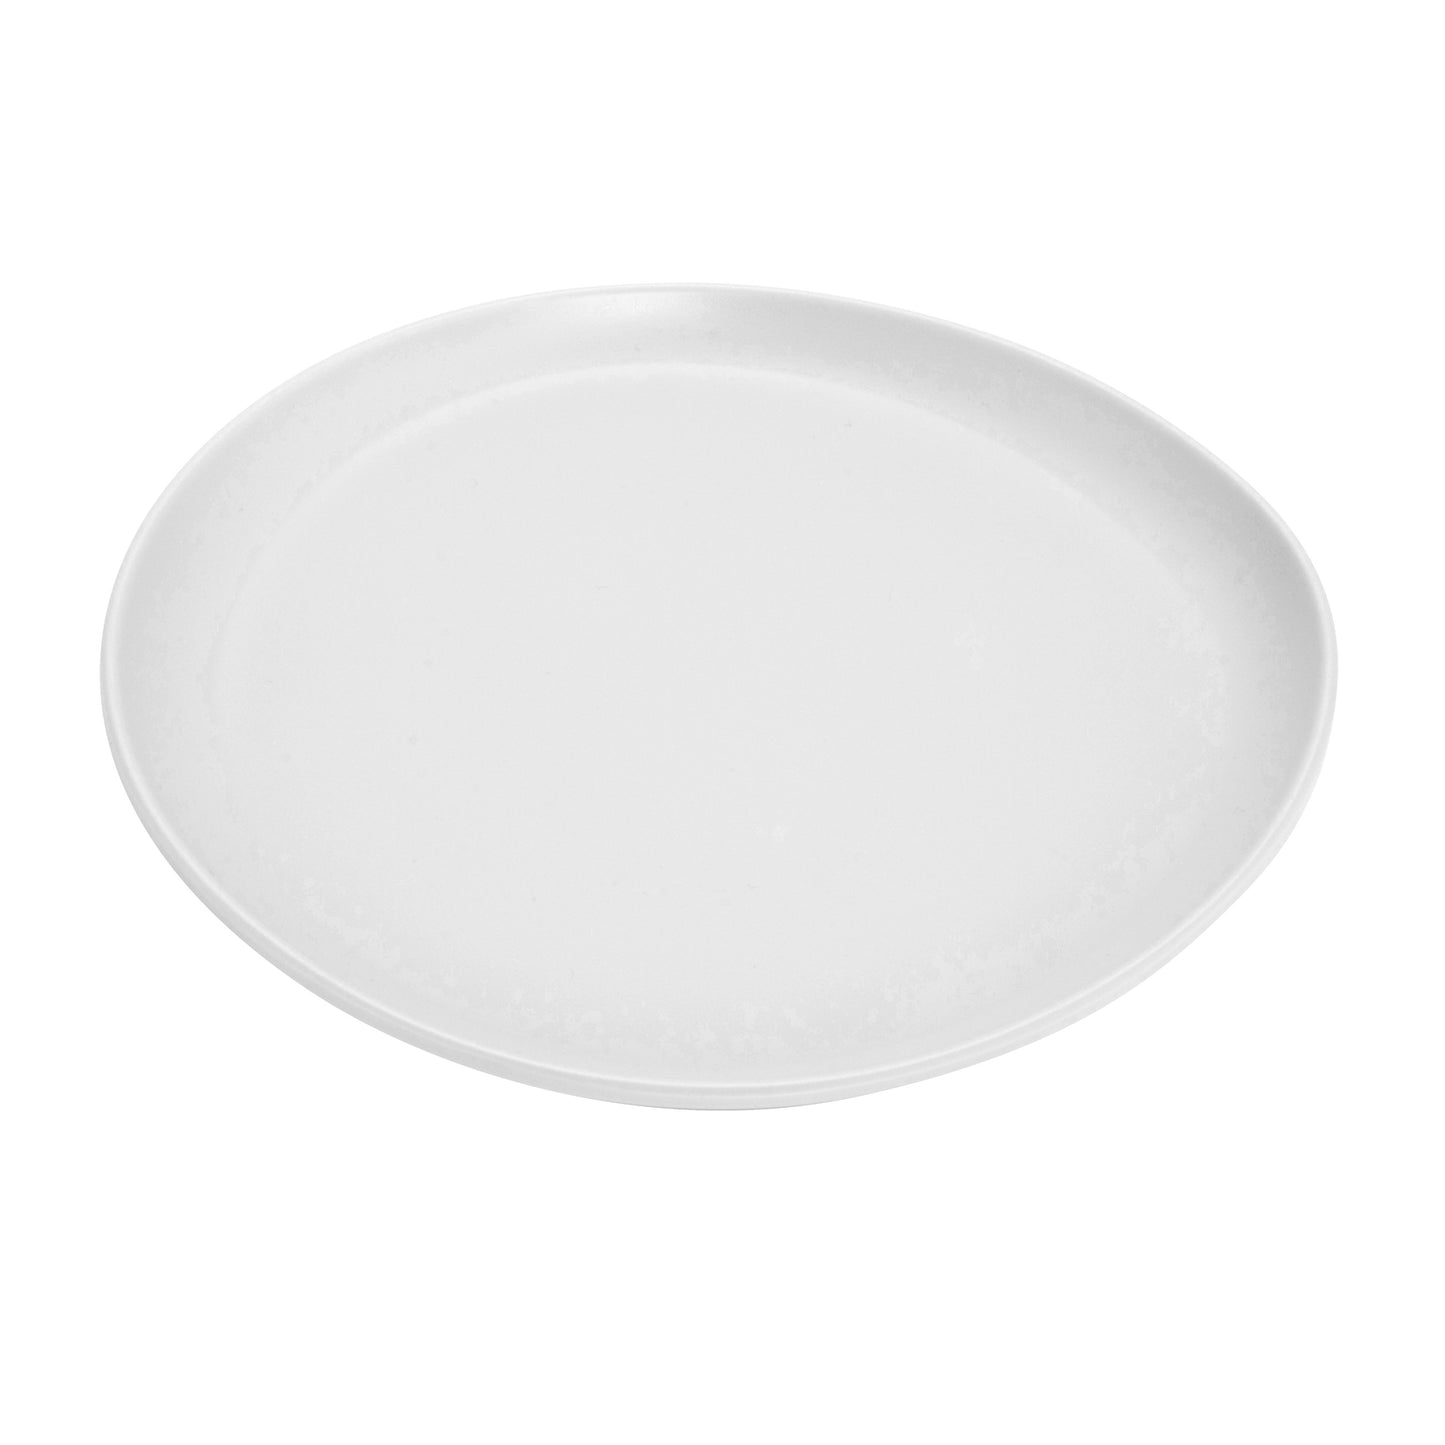 6" White, Melamine, Small Serving Plate, 0.65" H, G.E.T. Riverstone (12 Pack)